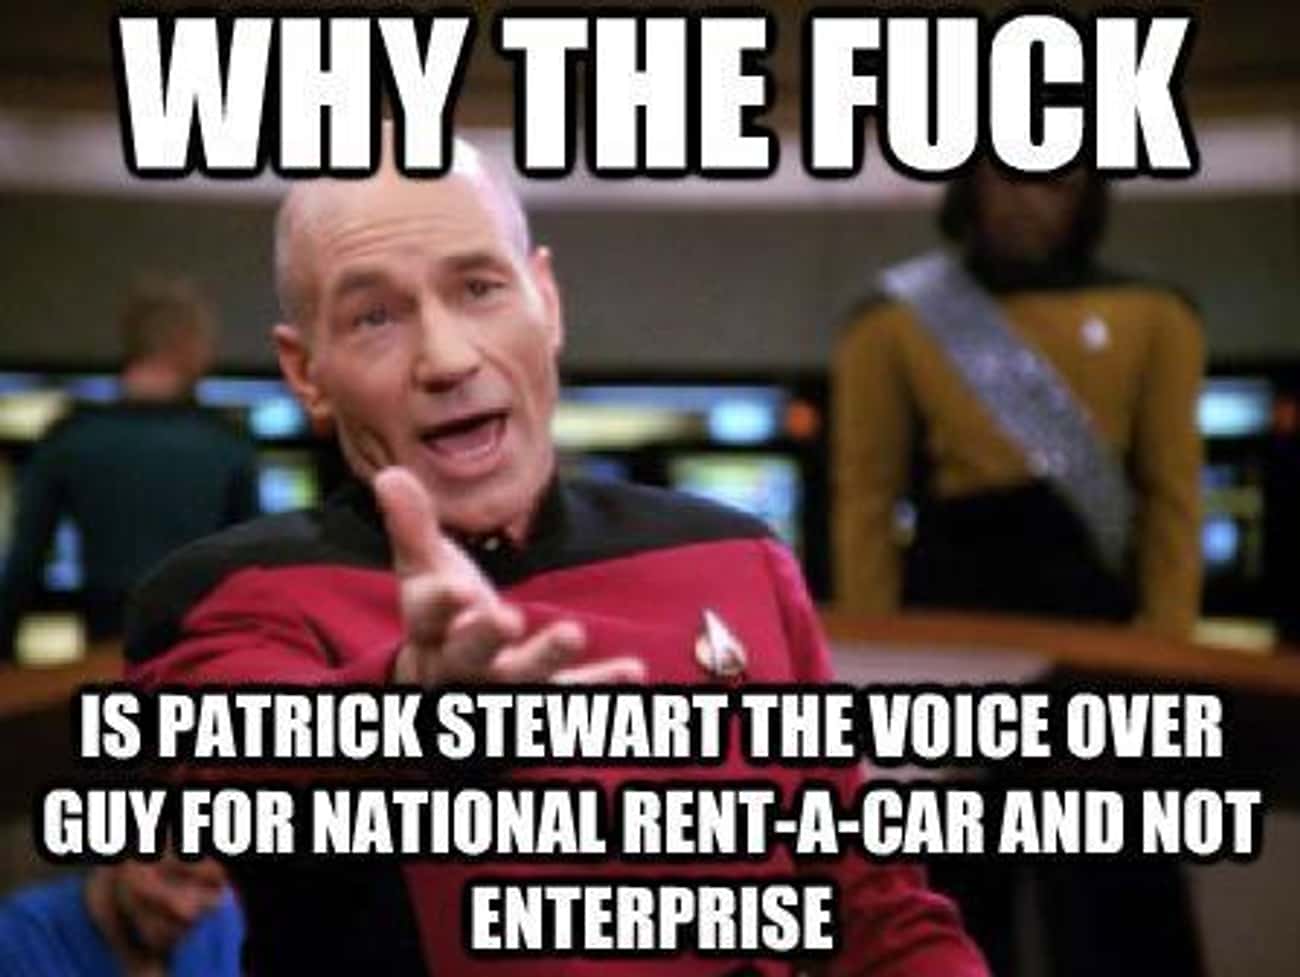 But I want Enterprise not Rent-A-Car